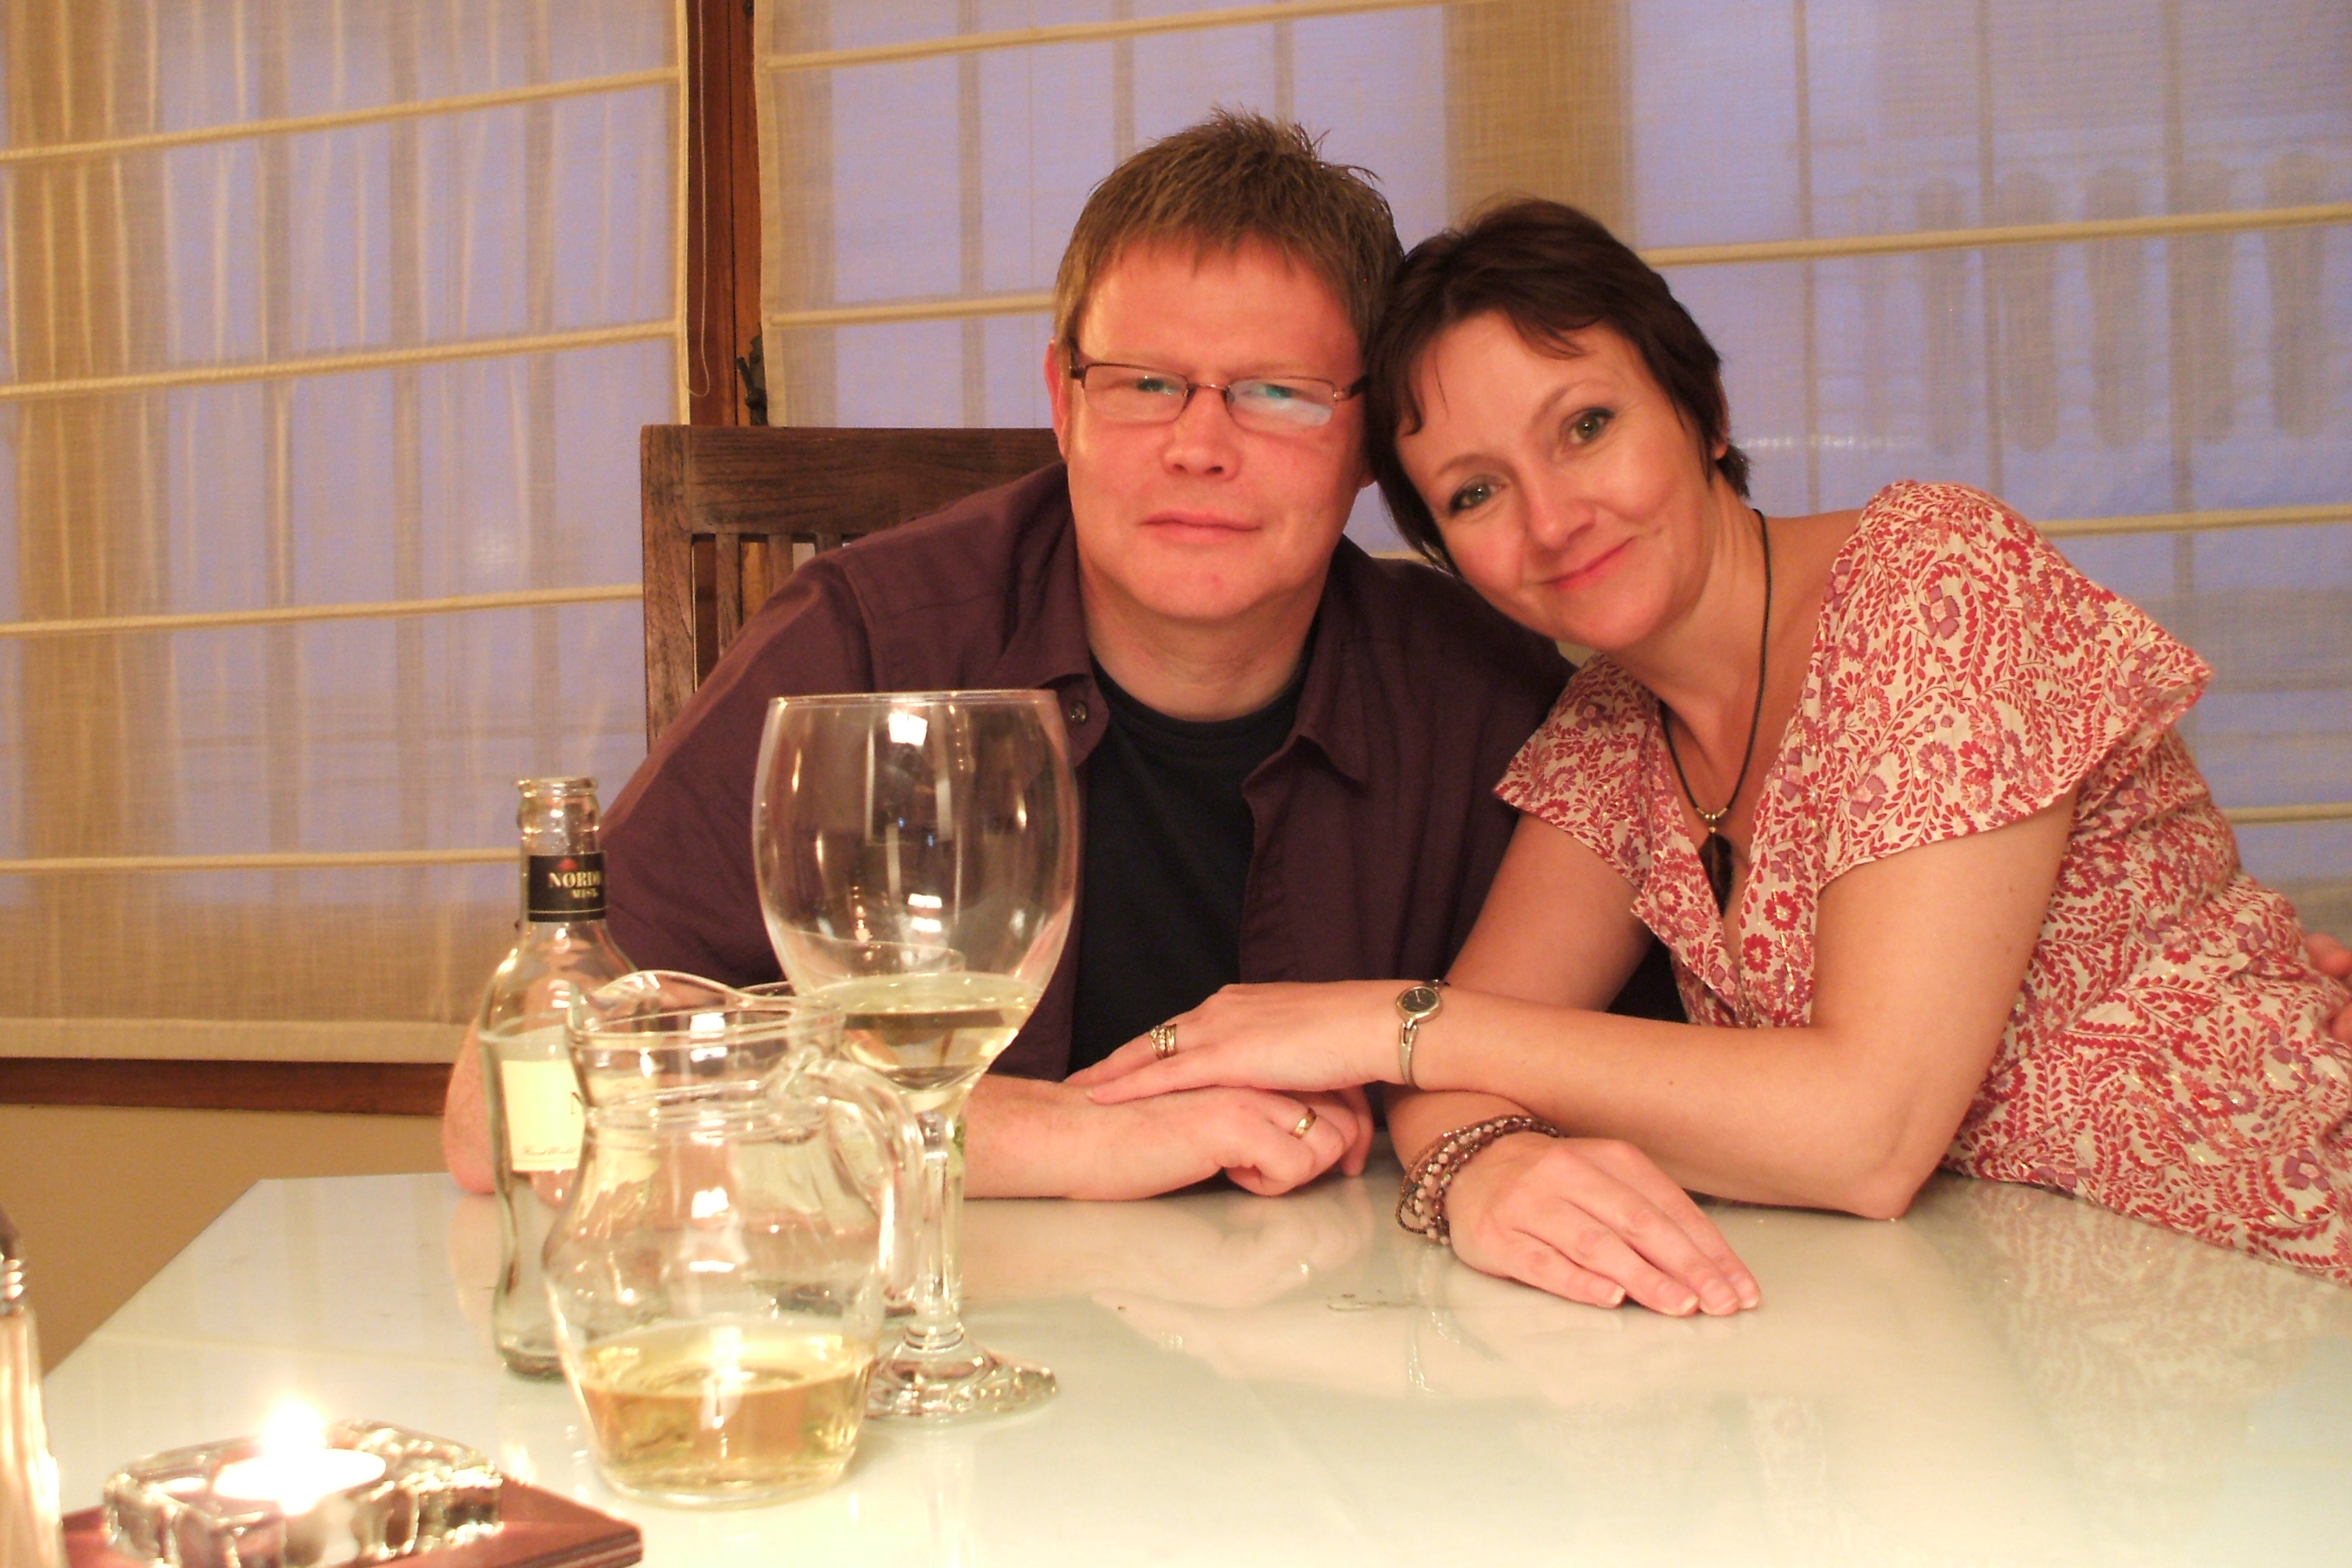 Tanya & Andy's wedding anniversary, 2009.